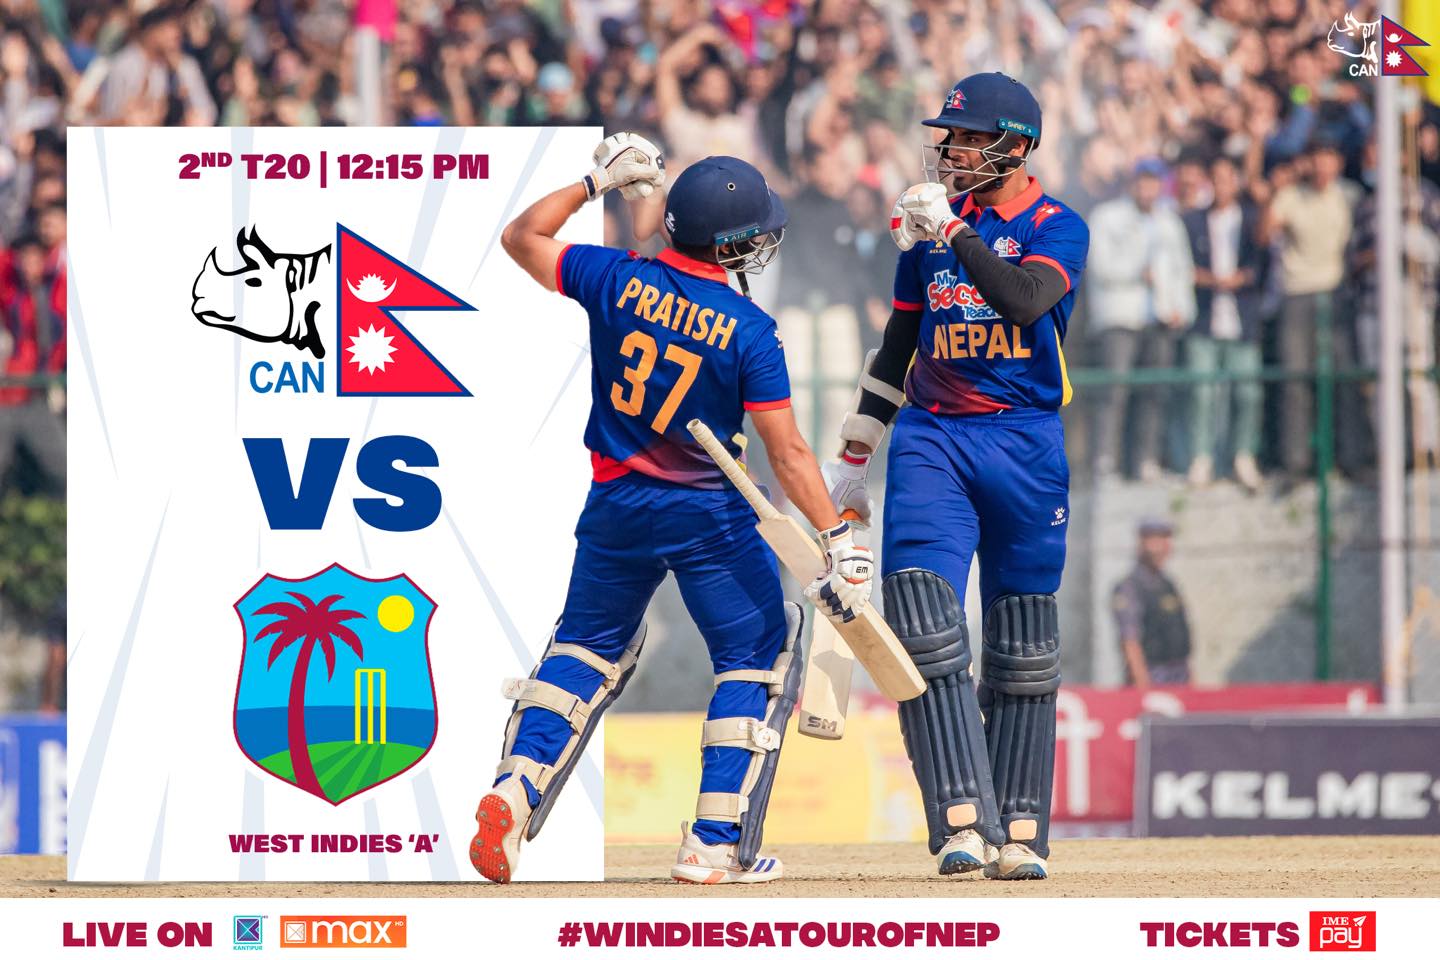 Historic T20 Series Nepal vs. West Indies A -Tour of Nepal- Cricket Destination Delight